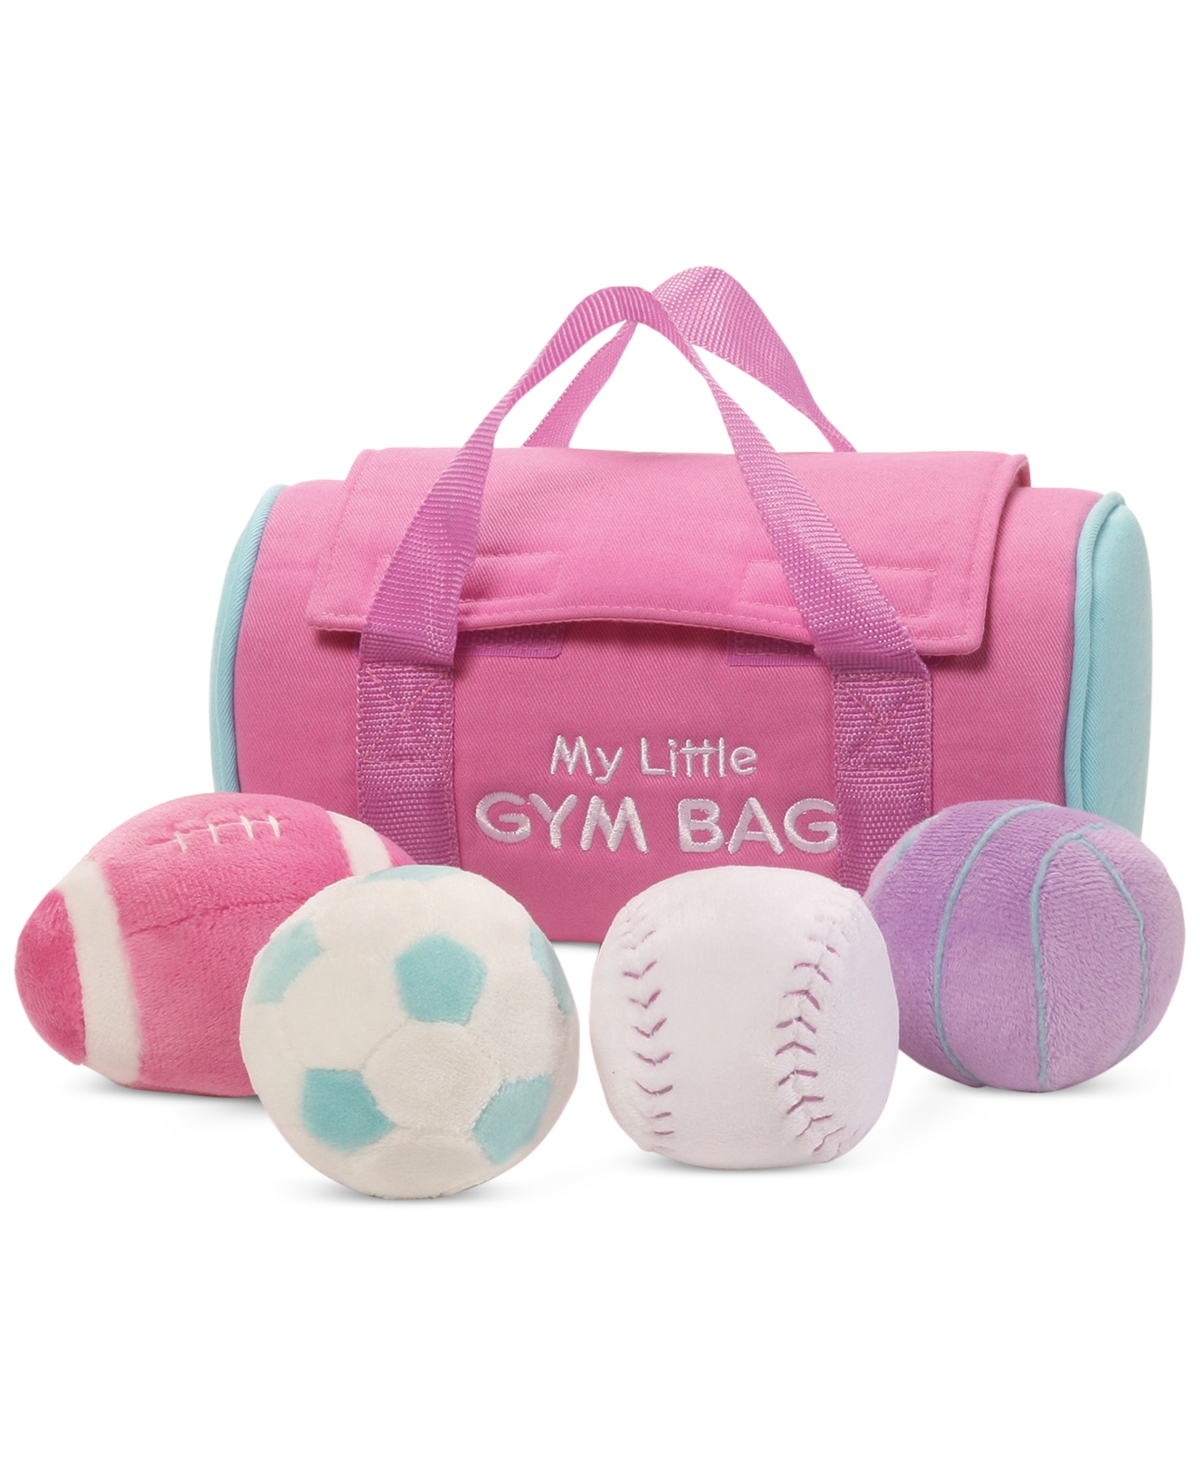 Gund Babies' My Little Gym Bag Play Set In Pastel